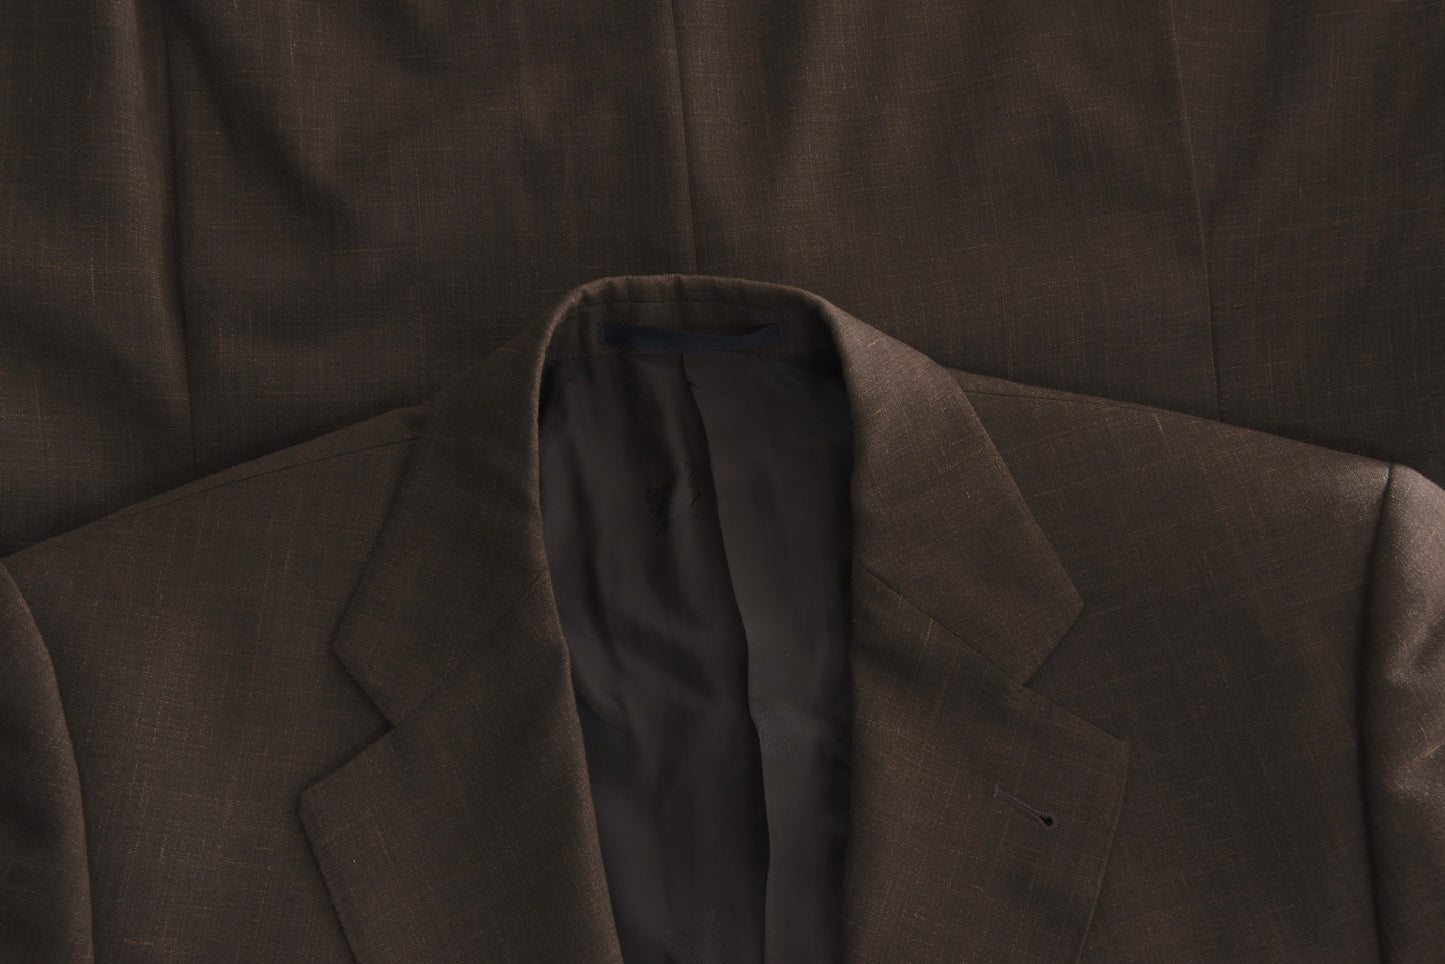 Burberry London Wool/Linen/Silk Jacket Size 25 - Brown